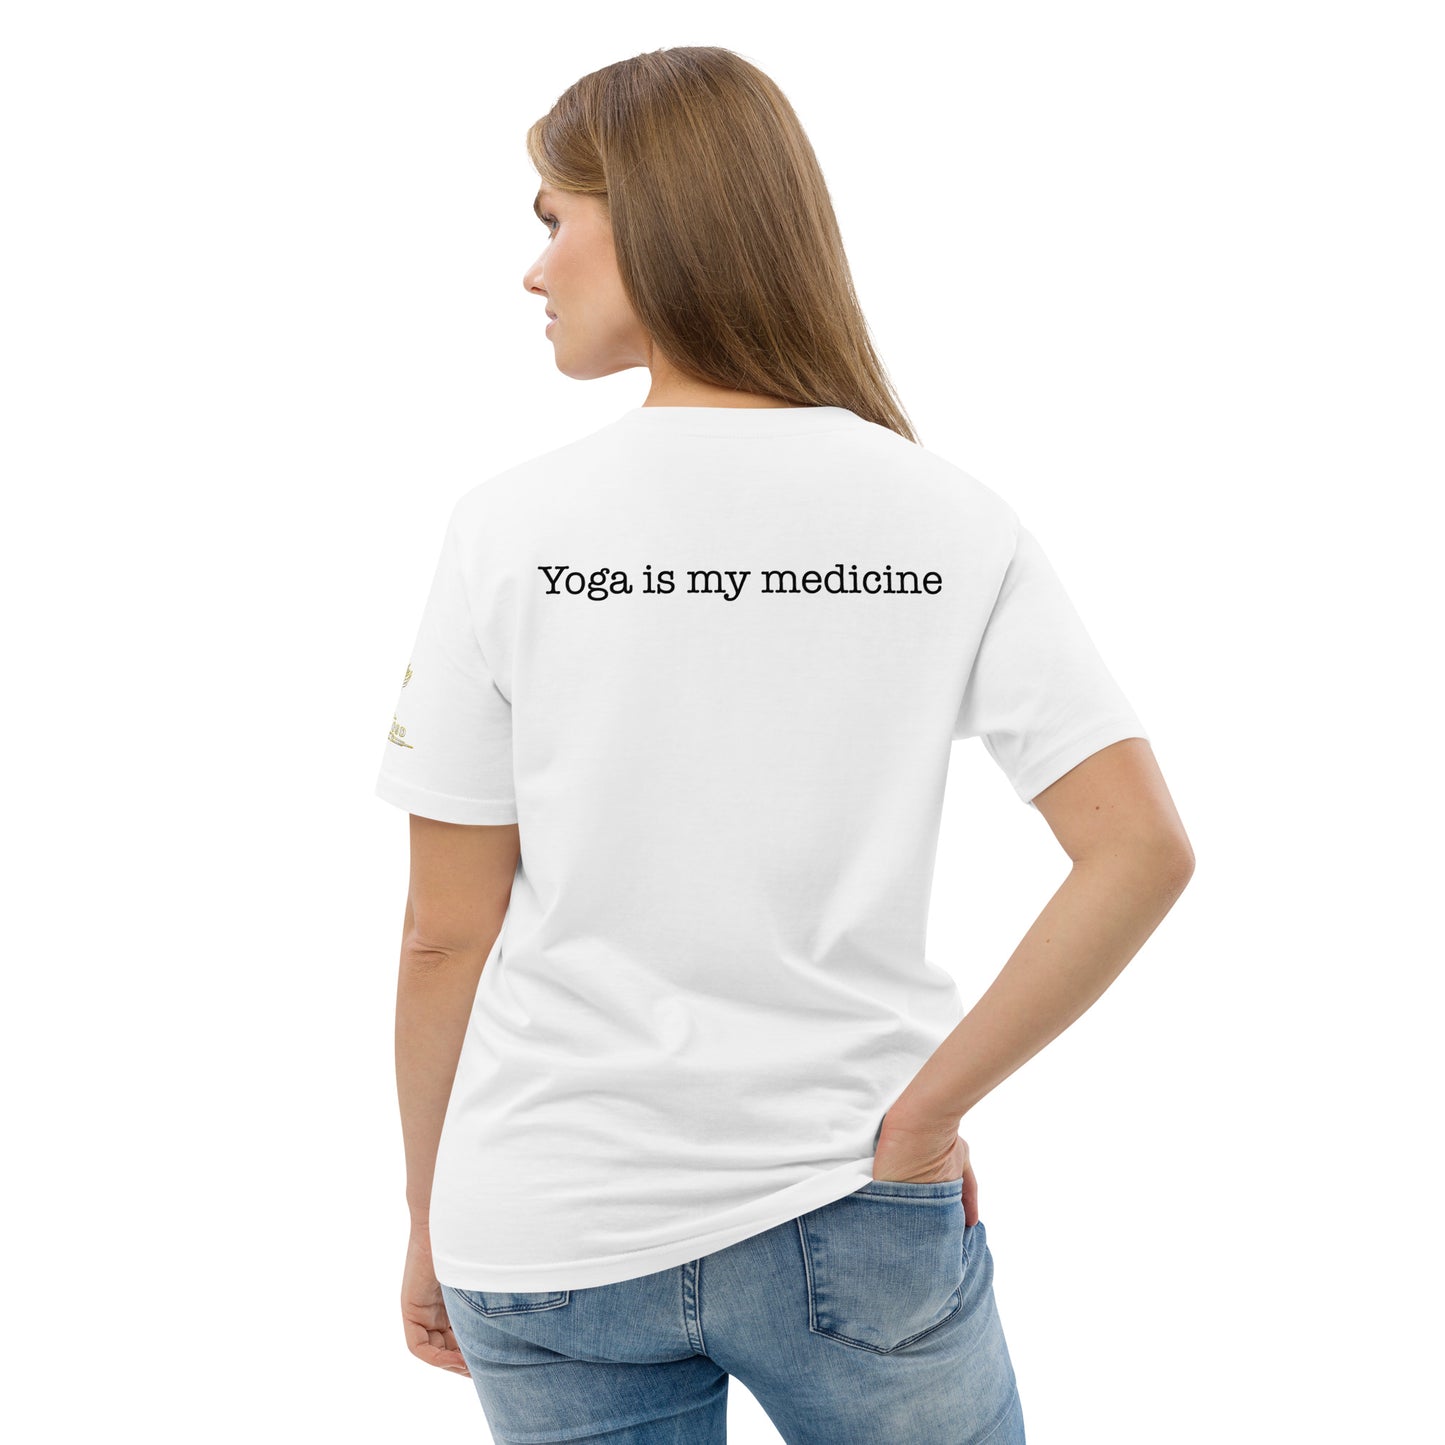 YOGA IS MY MEDICINE - BREATH OF FIRE Unisex organic cotton t-shirt